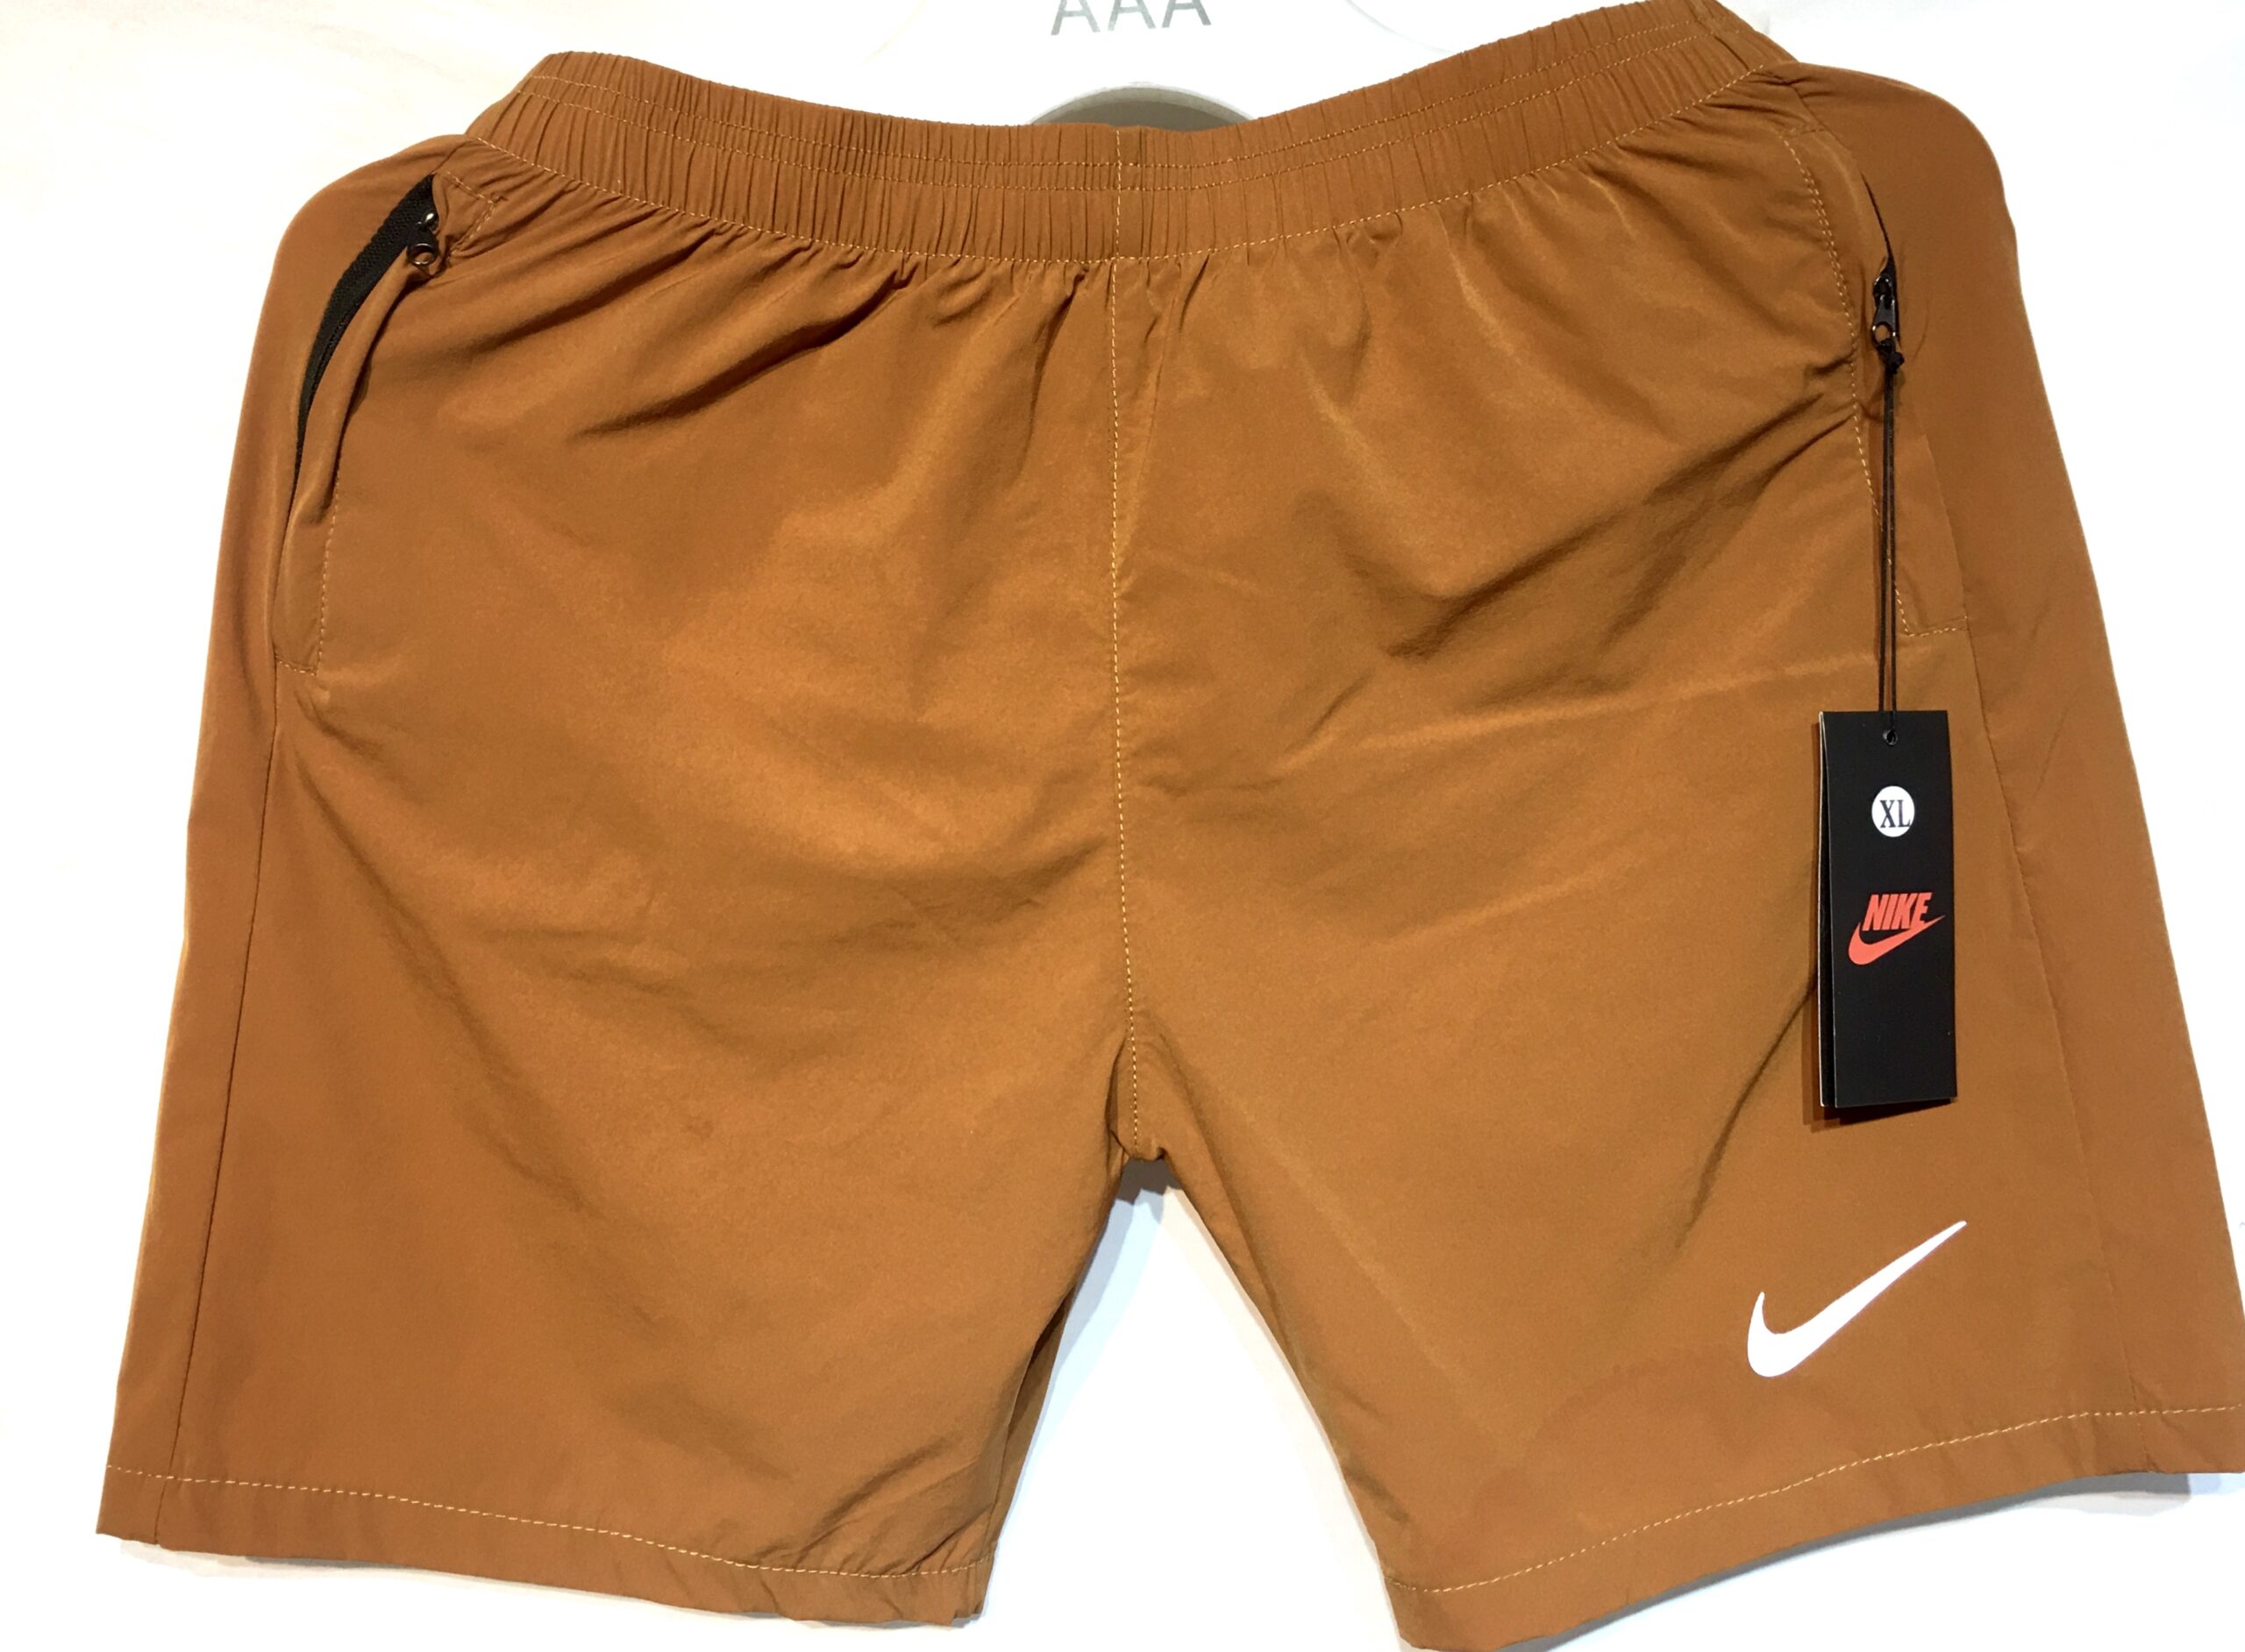 Buy HARDIHOOD Regular fit Half Pant Gym Running Sports Shorts for  Men(Maroon,m) at Amazon.in